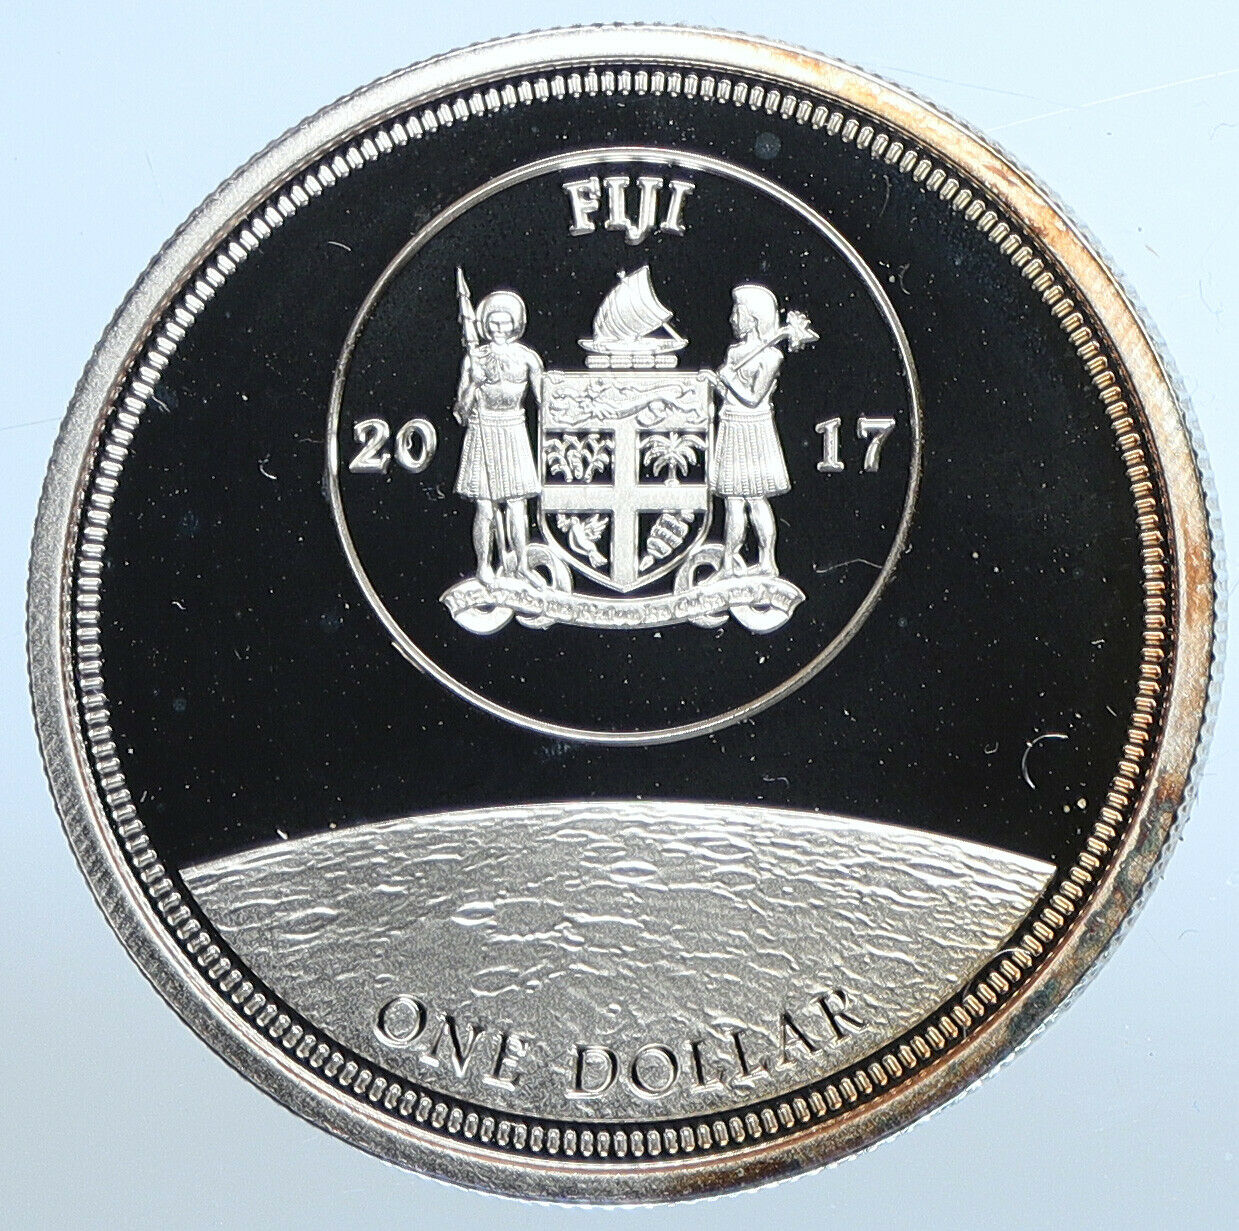 2017 FIJI Queen Elizabeth II FRIENDSHIP 7 NASA Space Misson Dollar Coin i111161